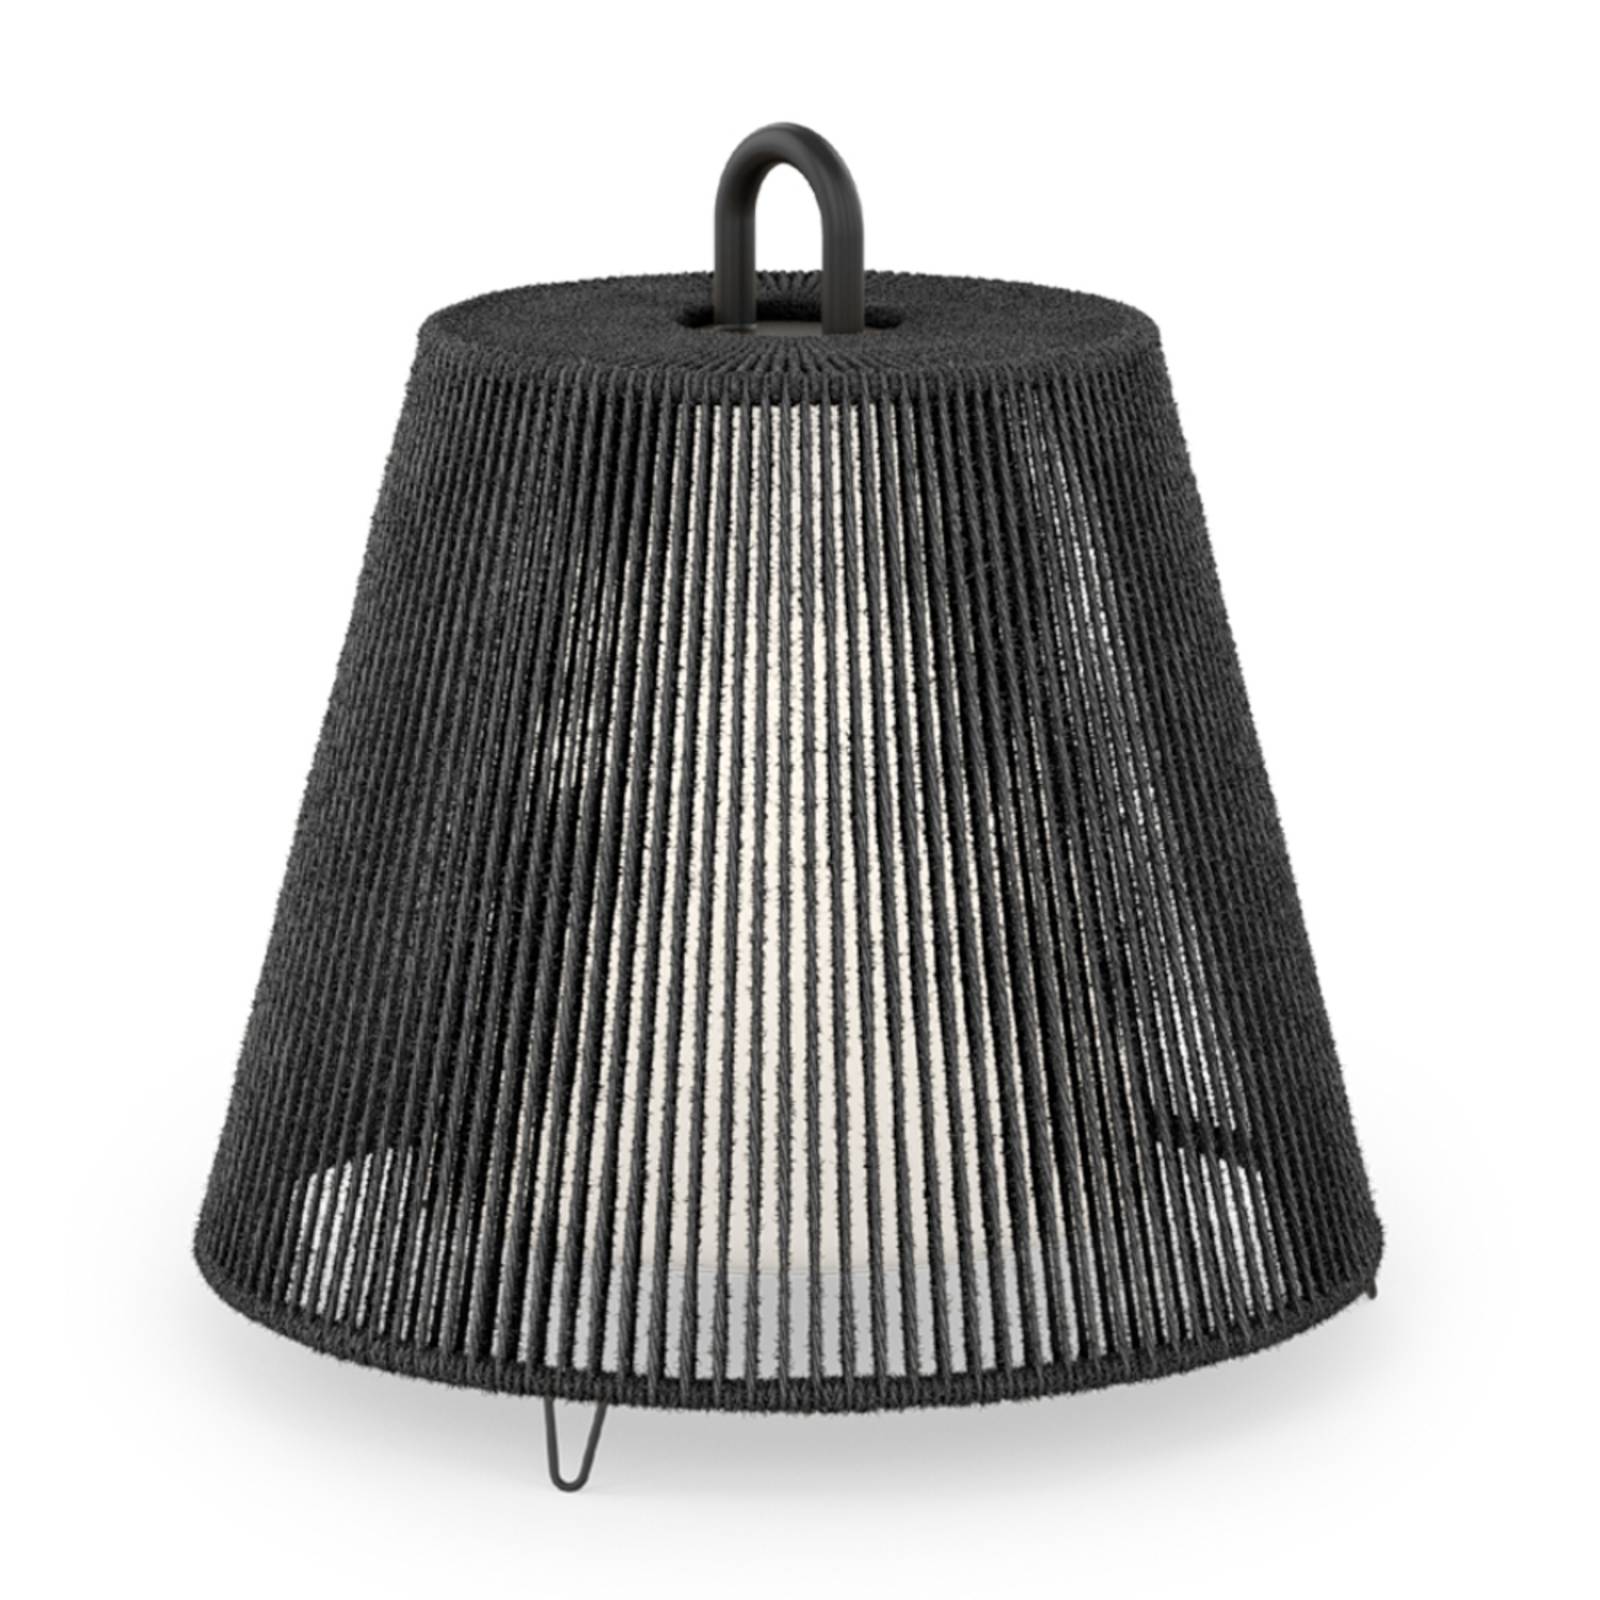 WEVER & DUCRÉ Lampenschirm Costa 1.0, schwarz, Seil, Ø 39 cm von Wever & Ducré Lighting